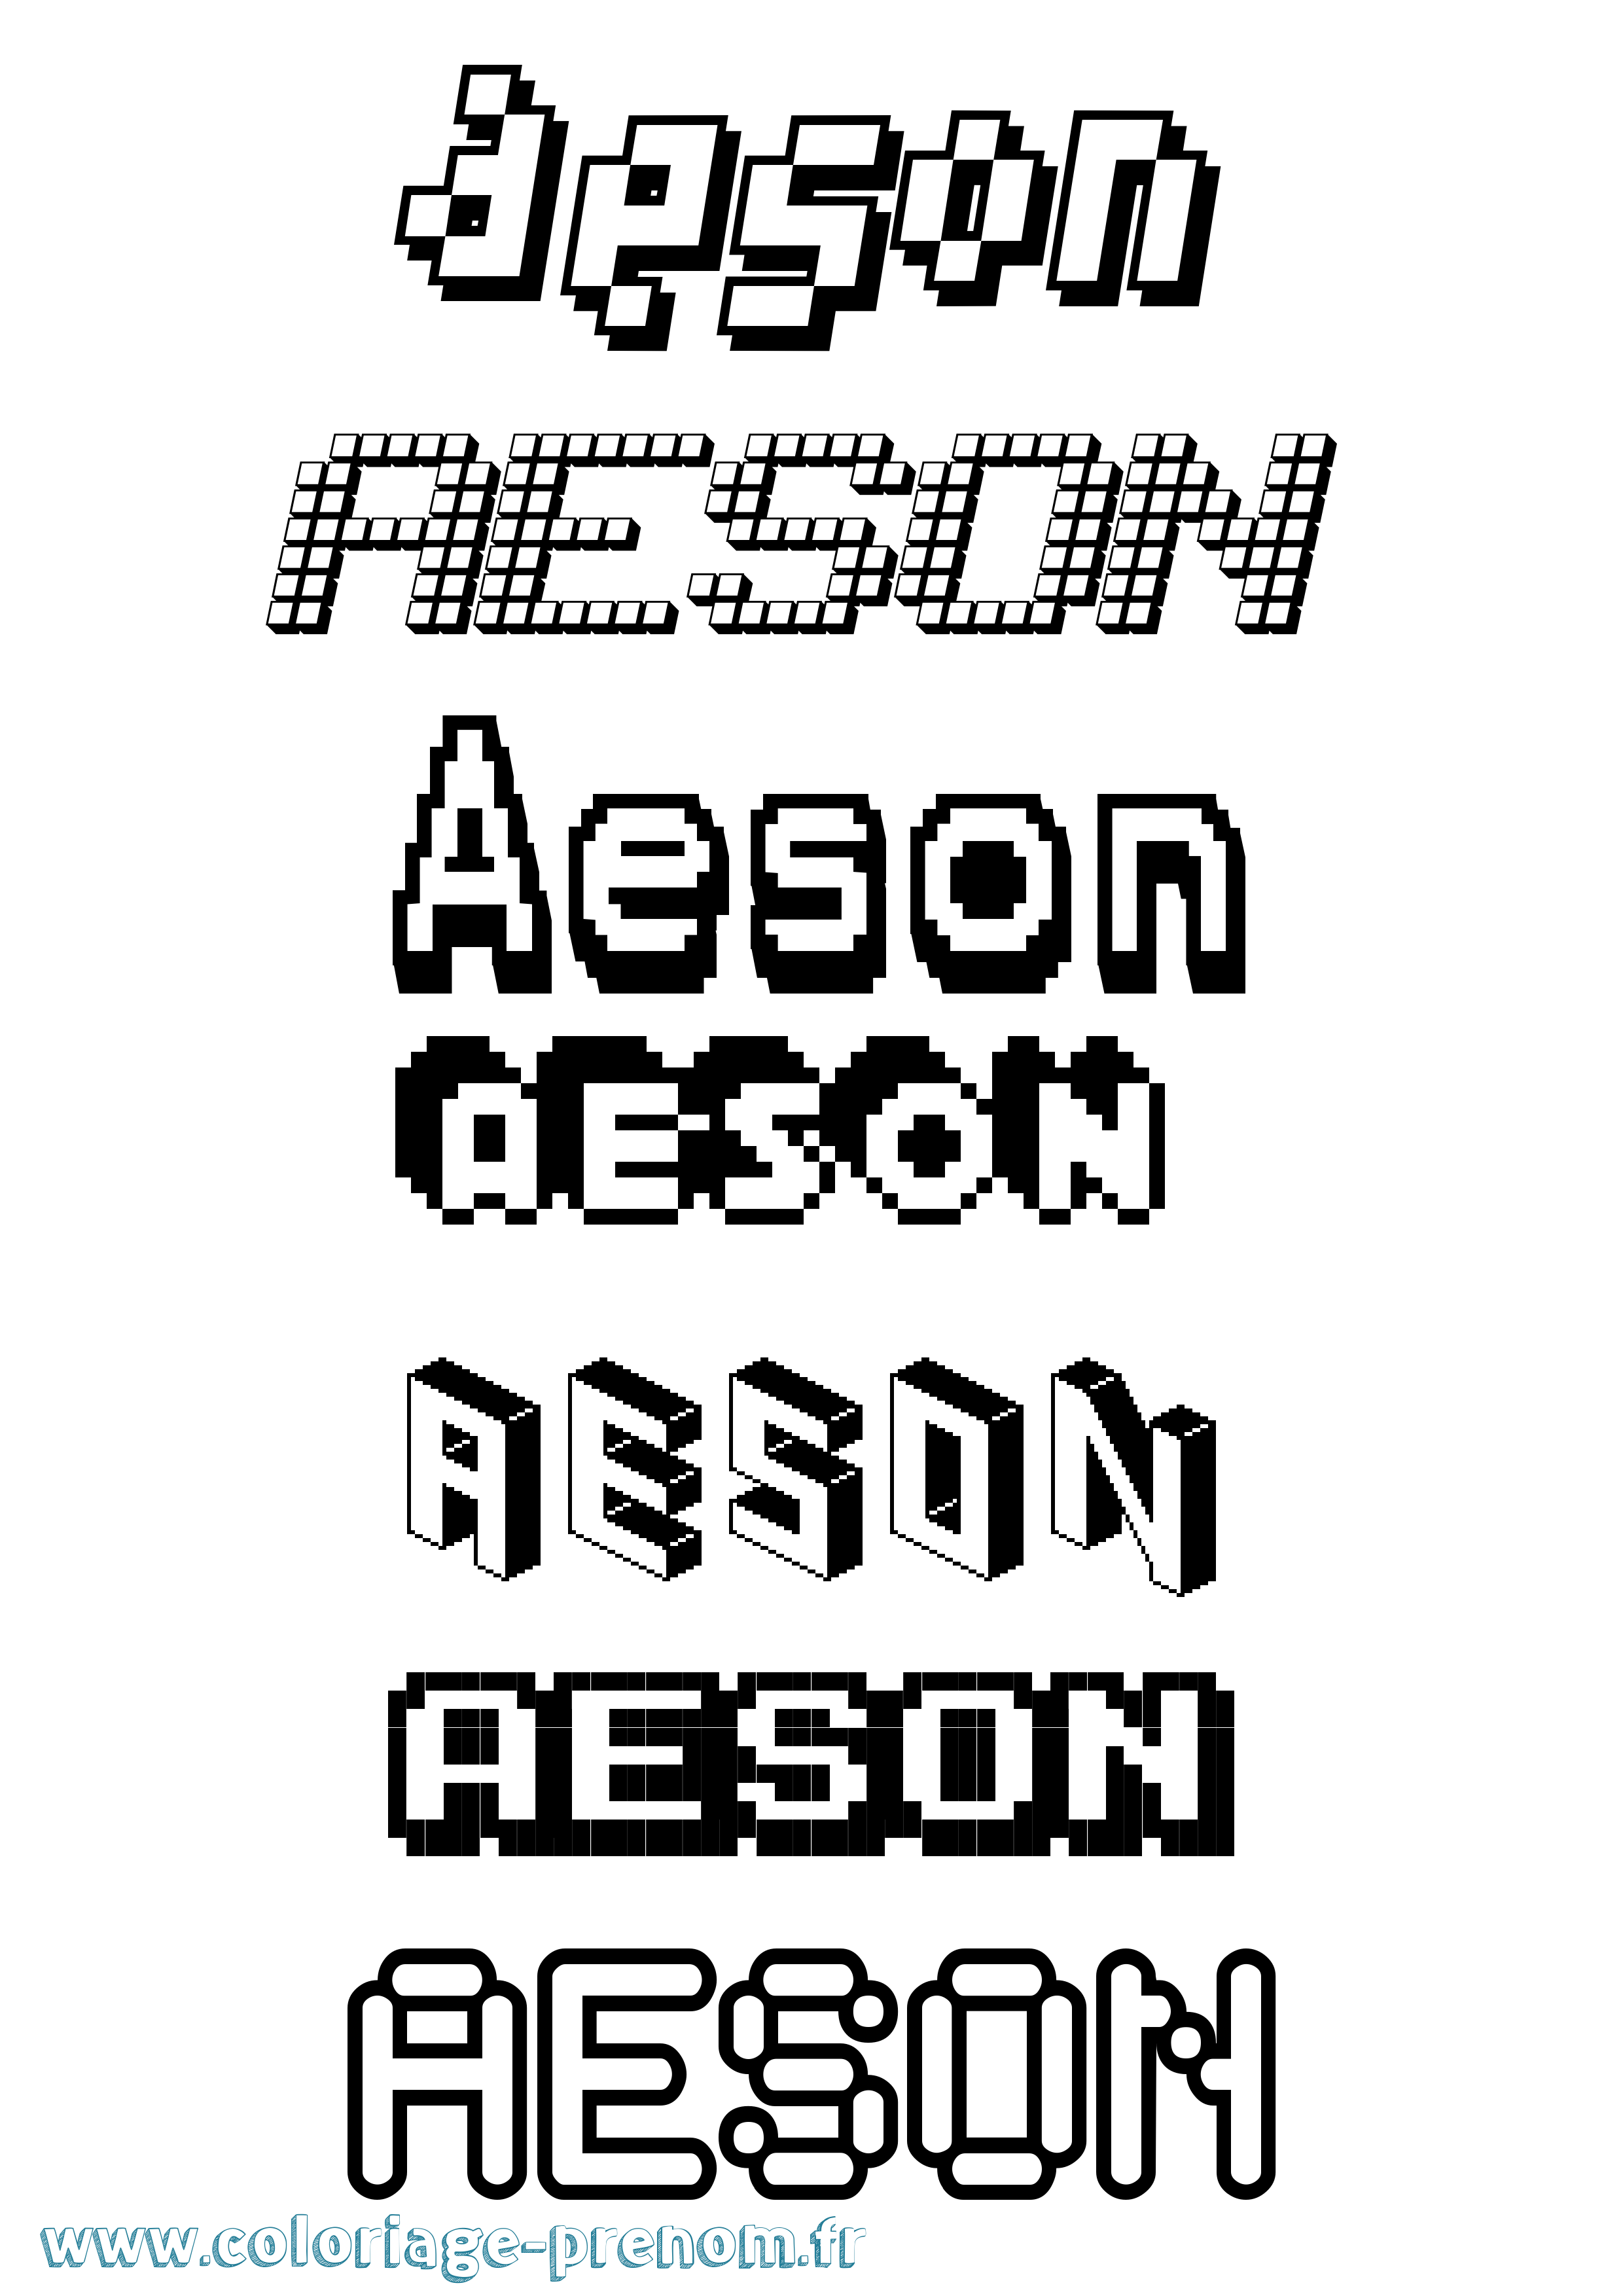 Coloriage prénom Aeson Pixel